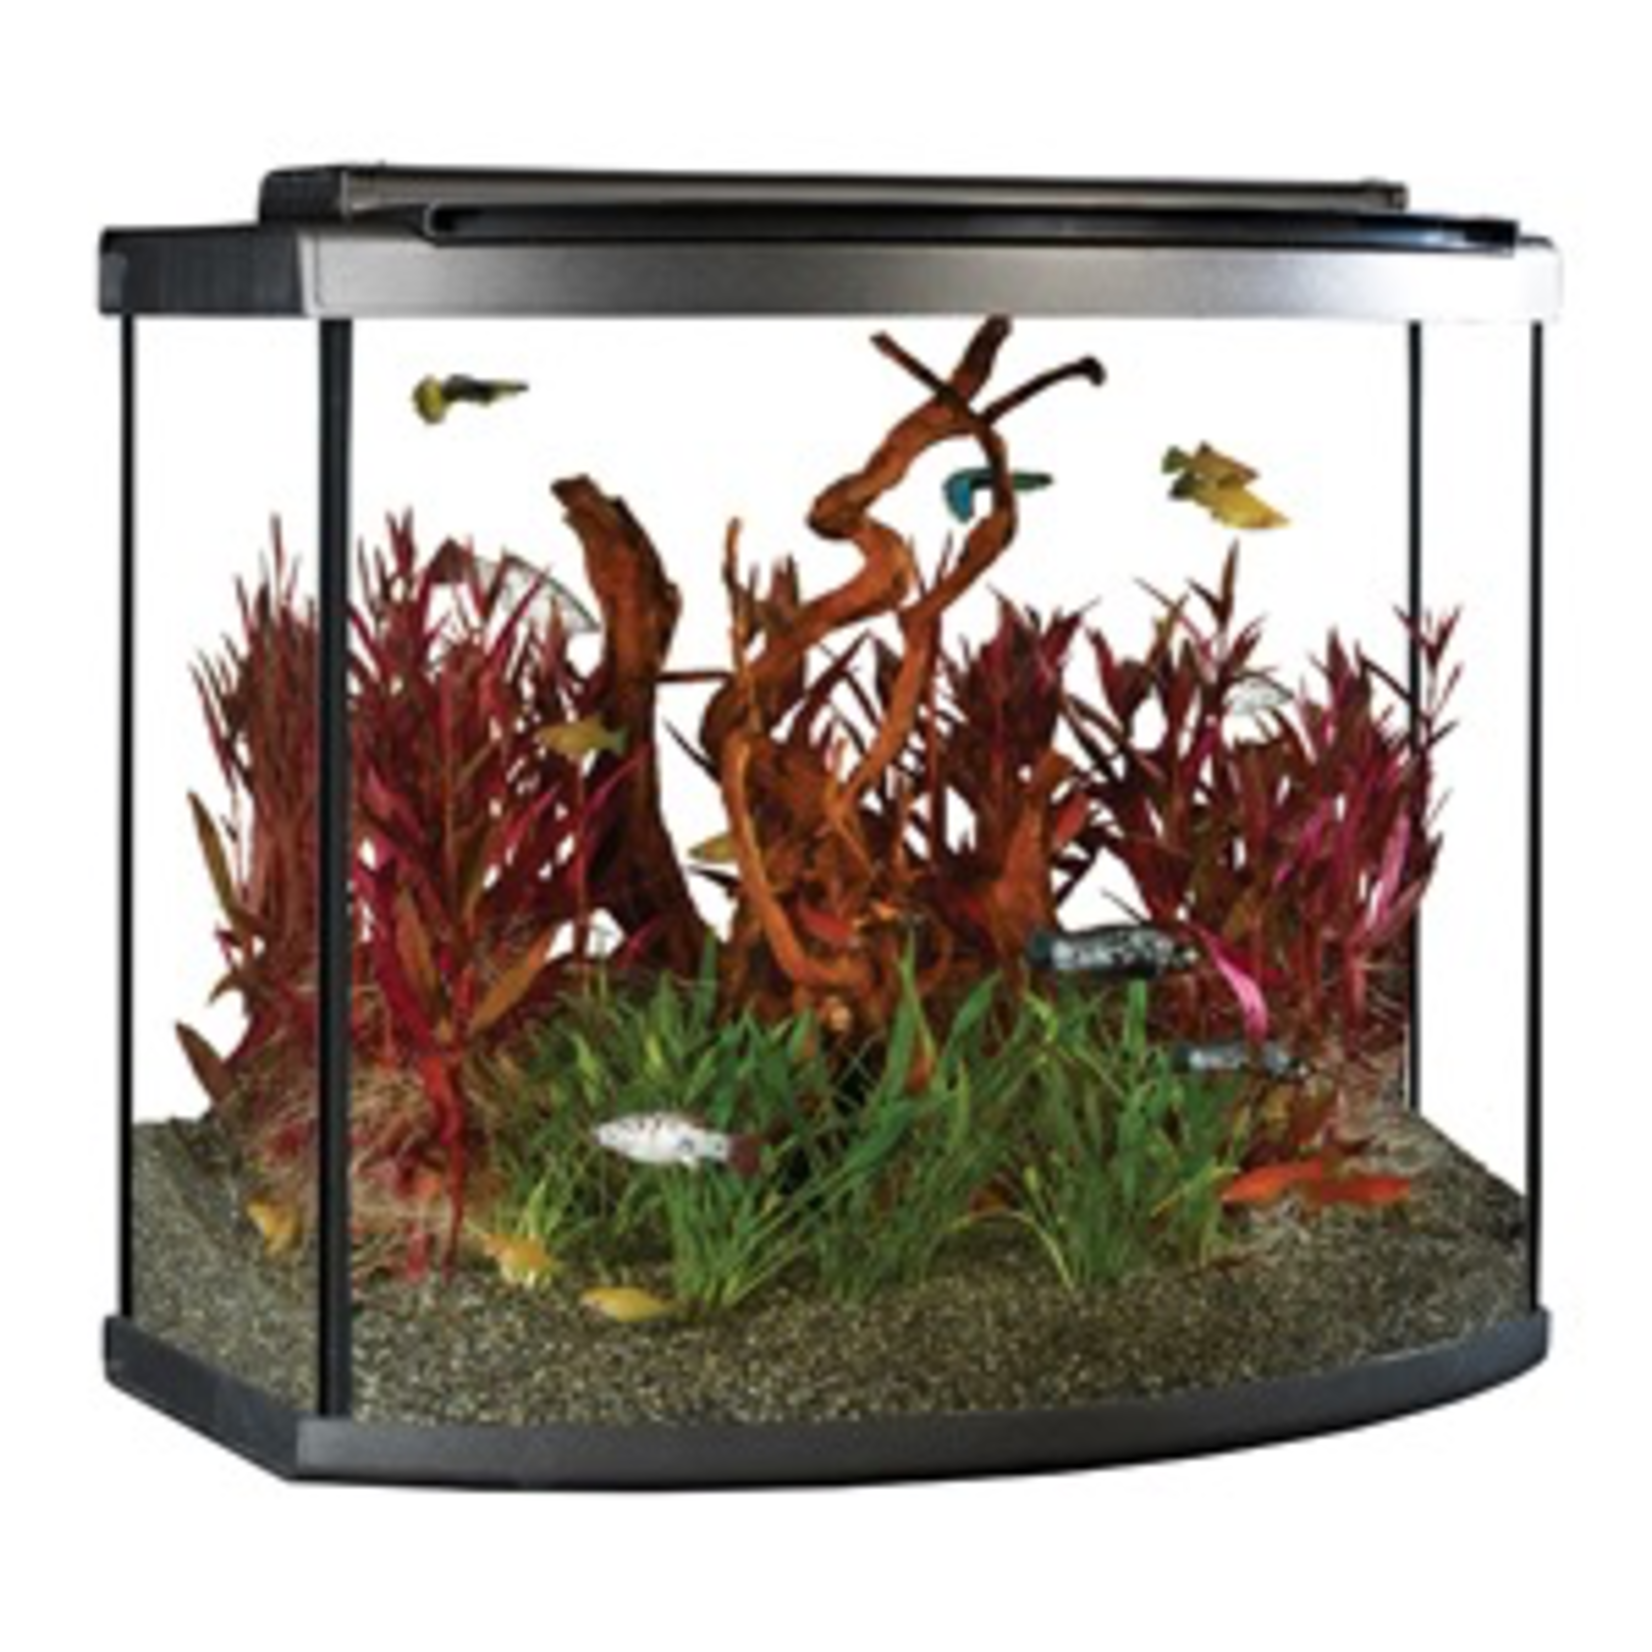 FLUVAL (W) Fluval Premium Aquarium Kit with LED - 26 Bow - 98 L (26 US Gal)